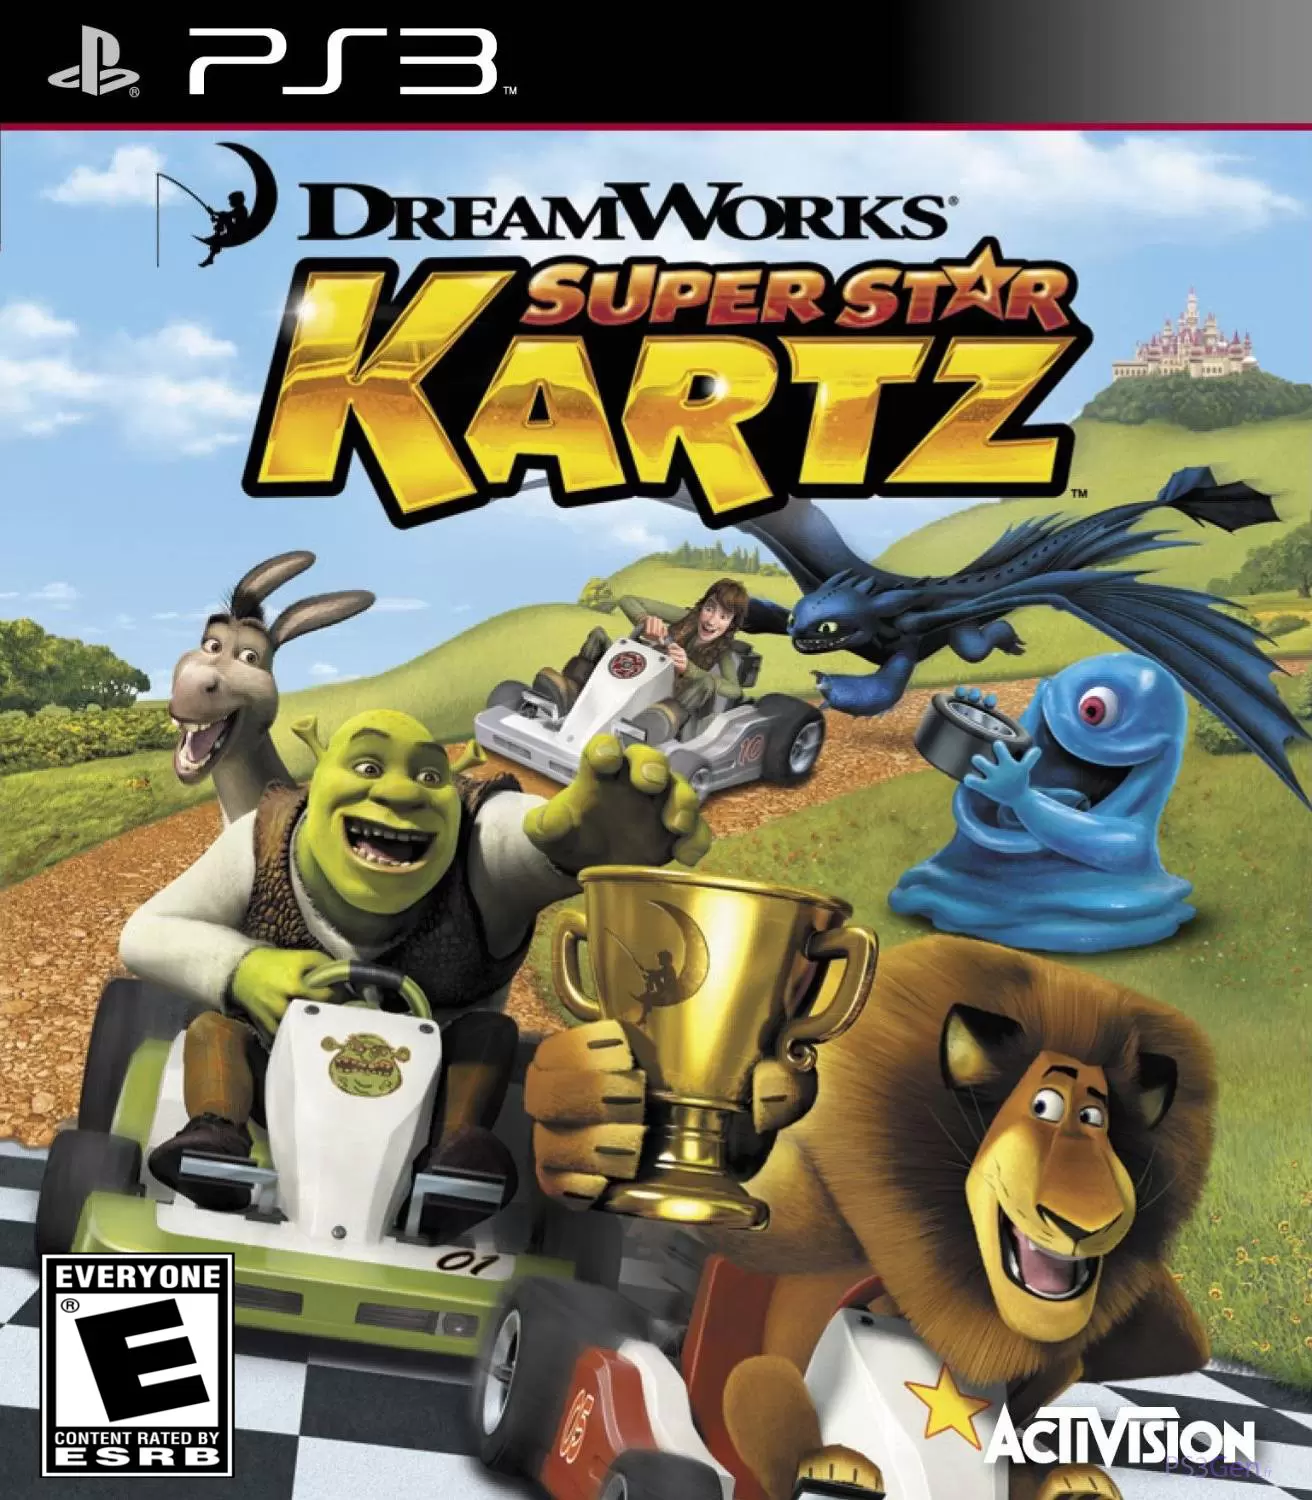 Jeux PS3 - DreamWorks Super Star Kartz